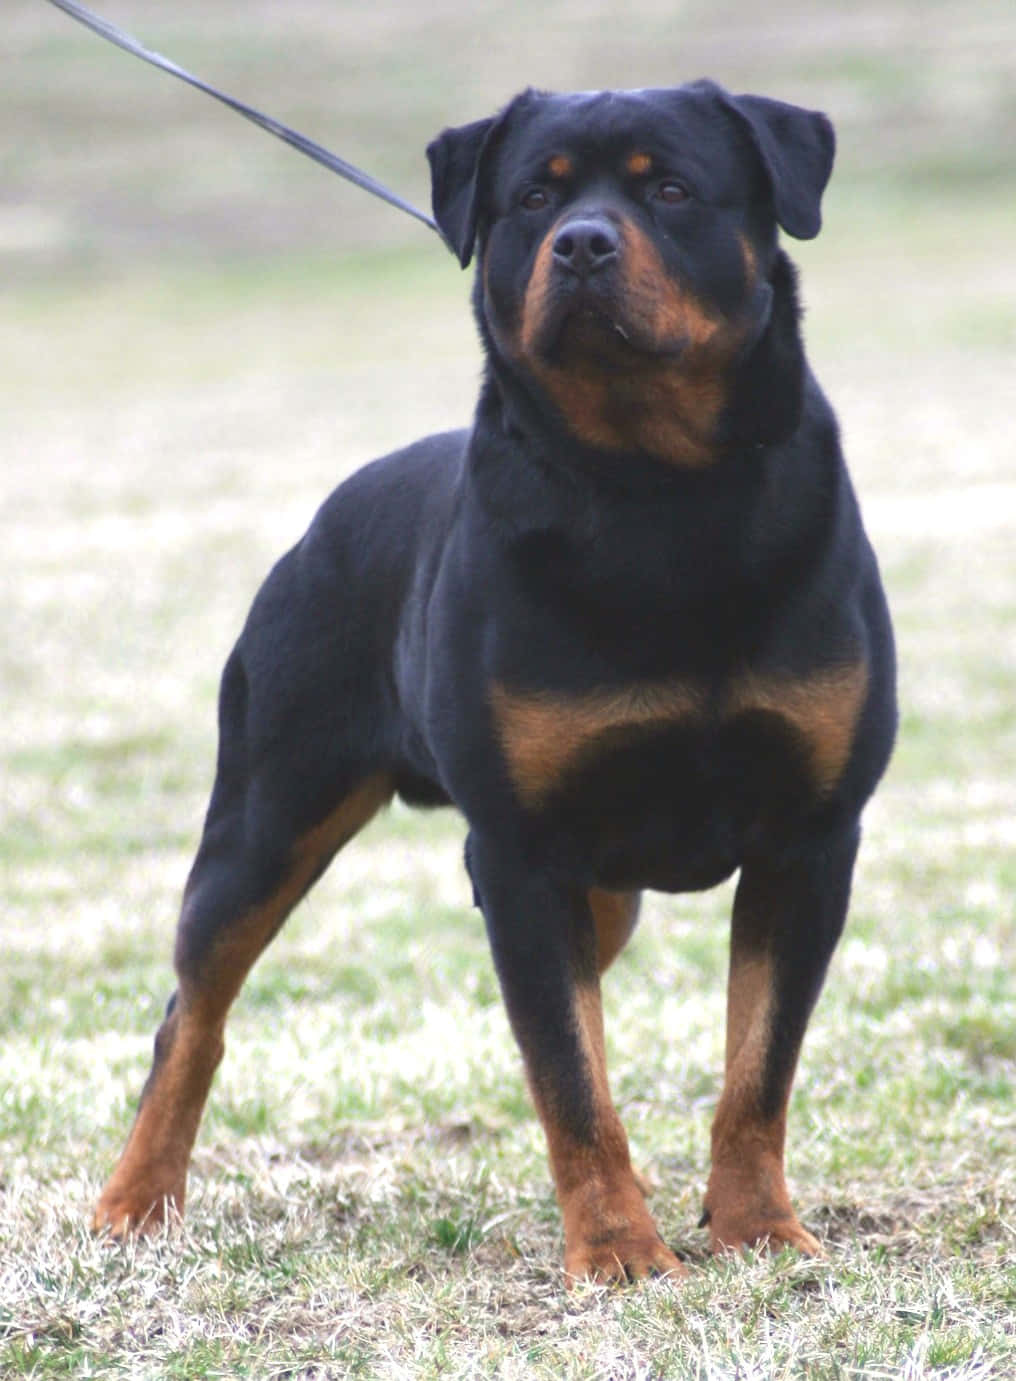 Unhermoso Cachorro Rottweiler, Posando Para Una Foto.